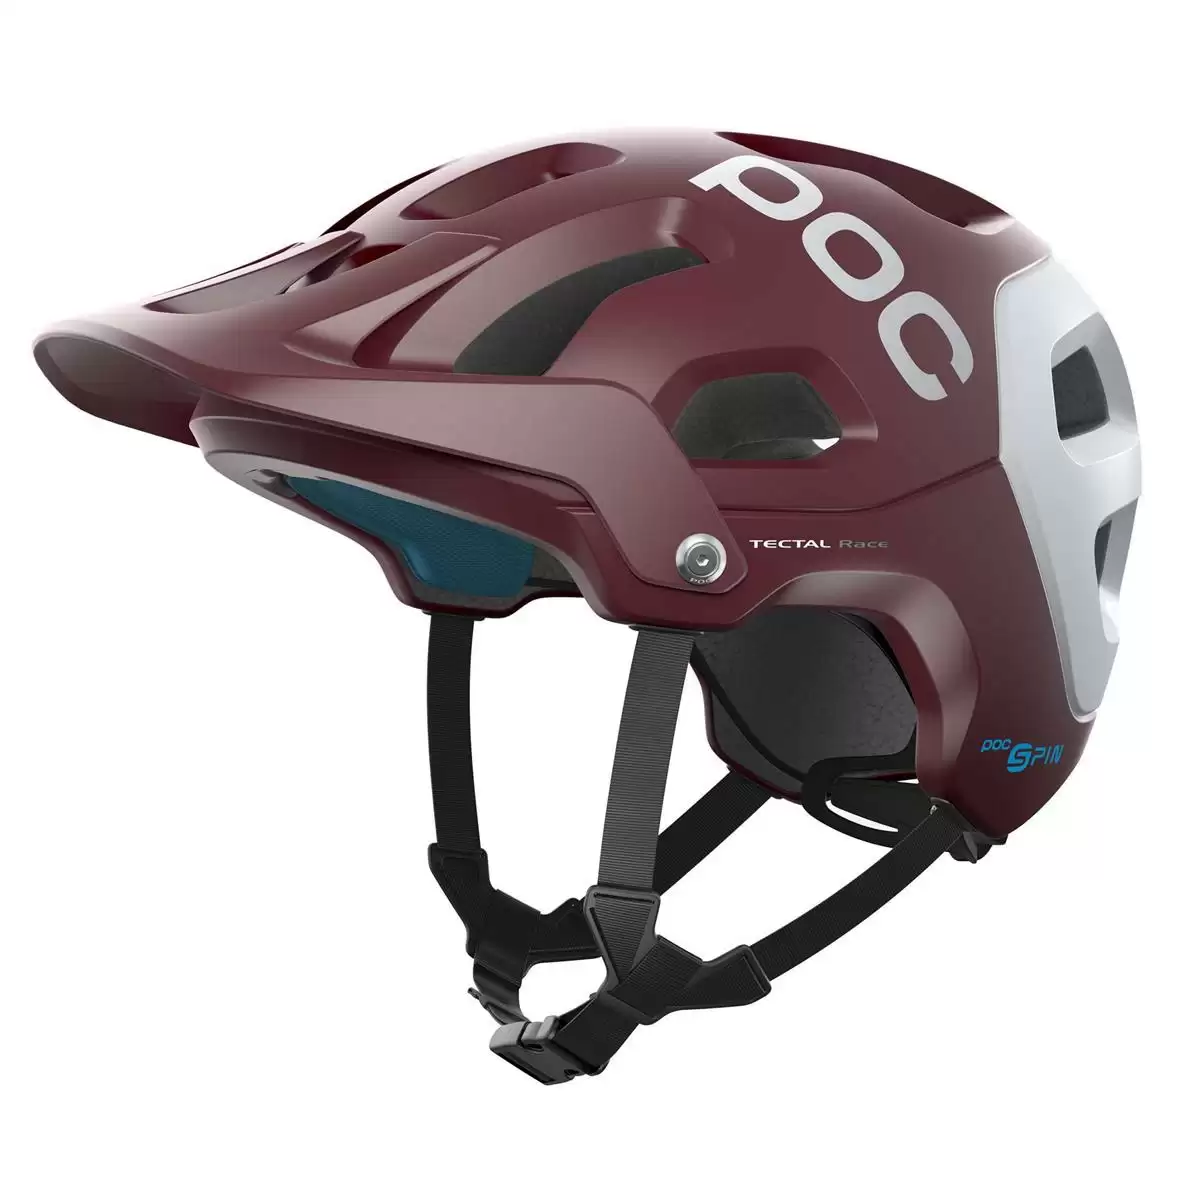 Enduro Helmet Tectal Race Spin Red Size XL-XXL (59-62cm) - image